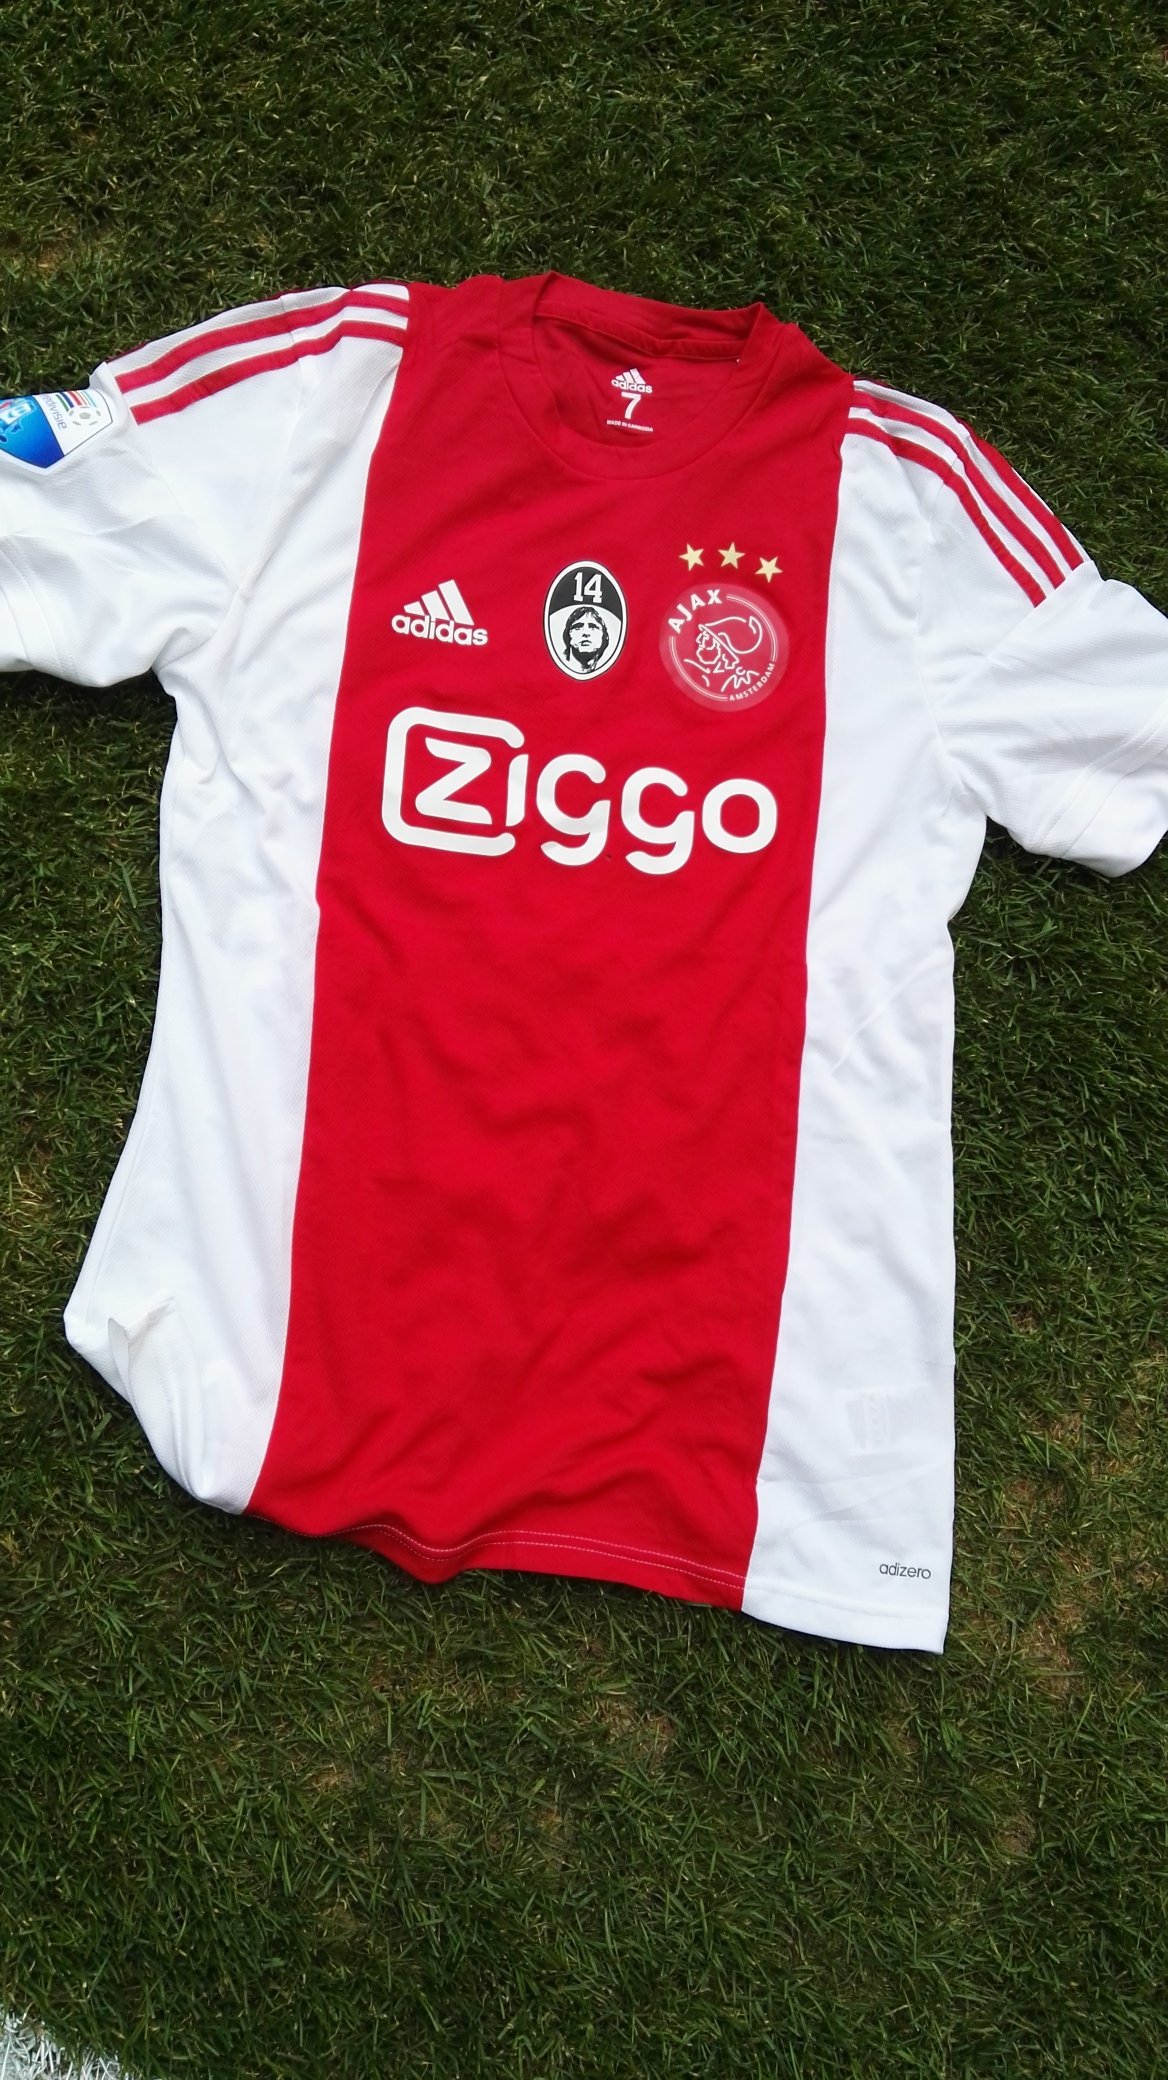 levering punt Veilig AFC Ajax on Twitter: "In dit schitterende shirt speelt #Ajax vandaag tegen  PEC Zwolle. #vooraltijdnr14 https://t.co/OrekBEniW3" / Twitter